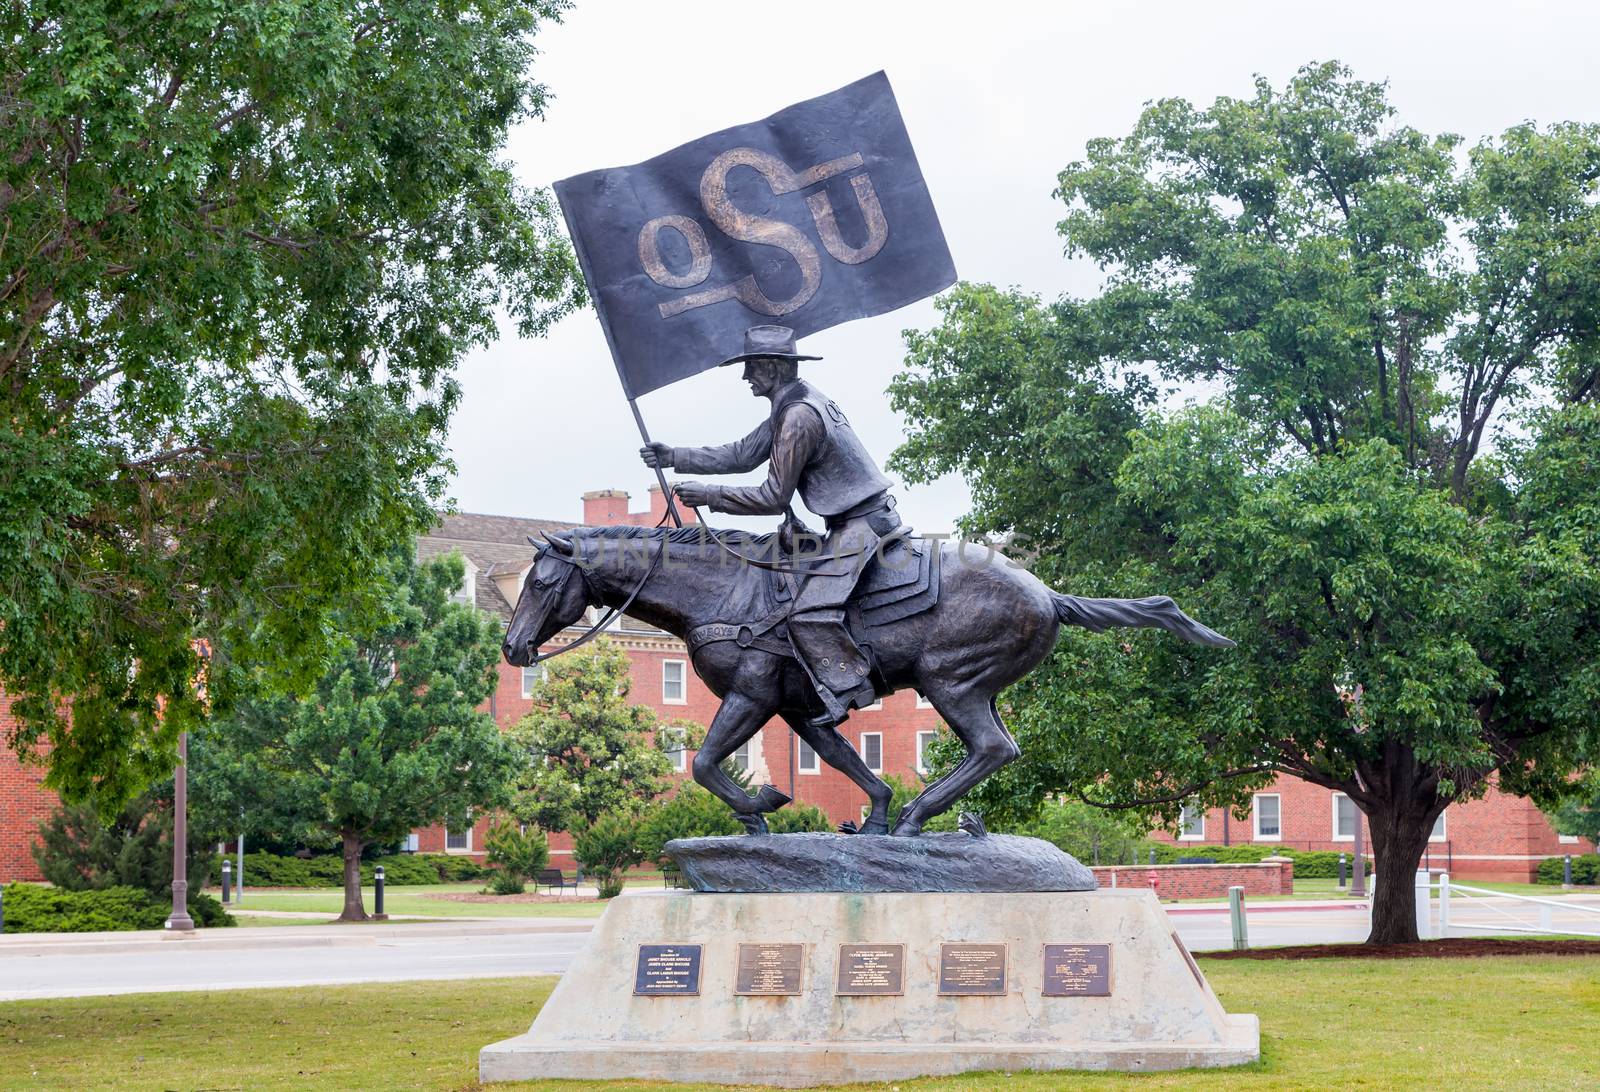 STILLWATER, OK/USA - MAY 20, 2016: The OSU Spirt Rider on the campus of Oklahoma State University.